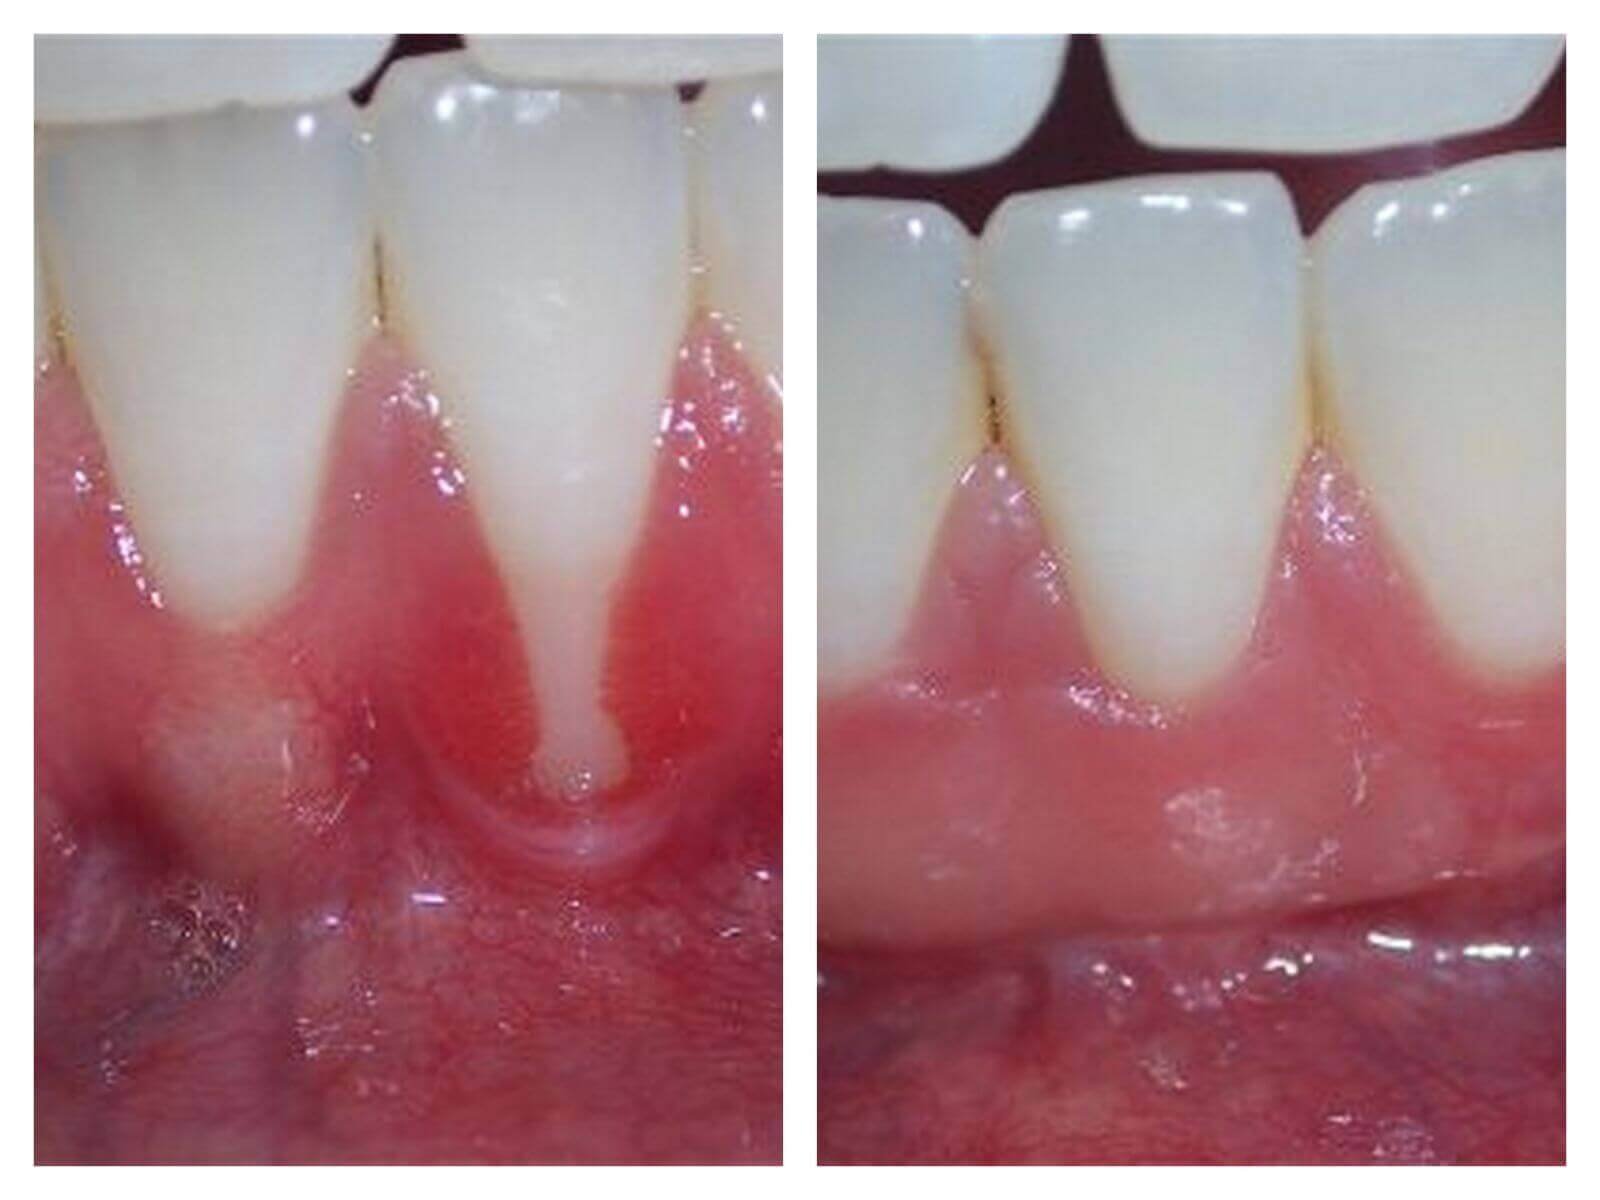 Dr_Gandhi_Dental_Clinic_Treatment_Page_Gum_and-Oral-Surgeries-1_image_At_Gum_Surgeries.